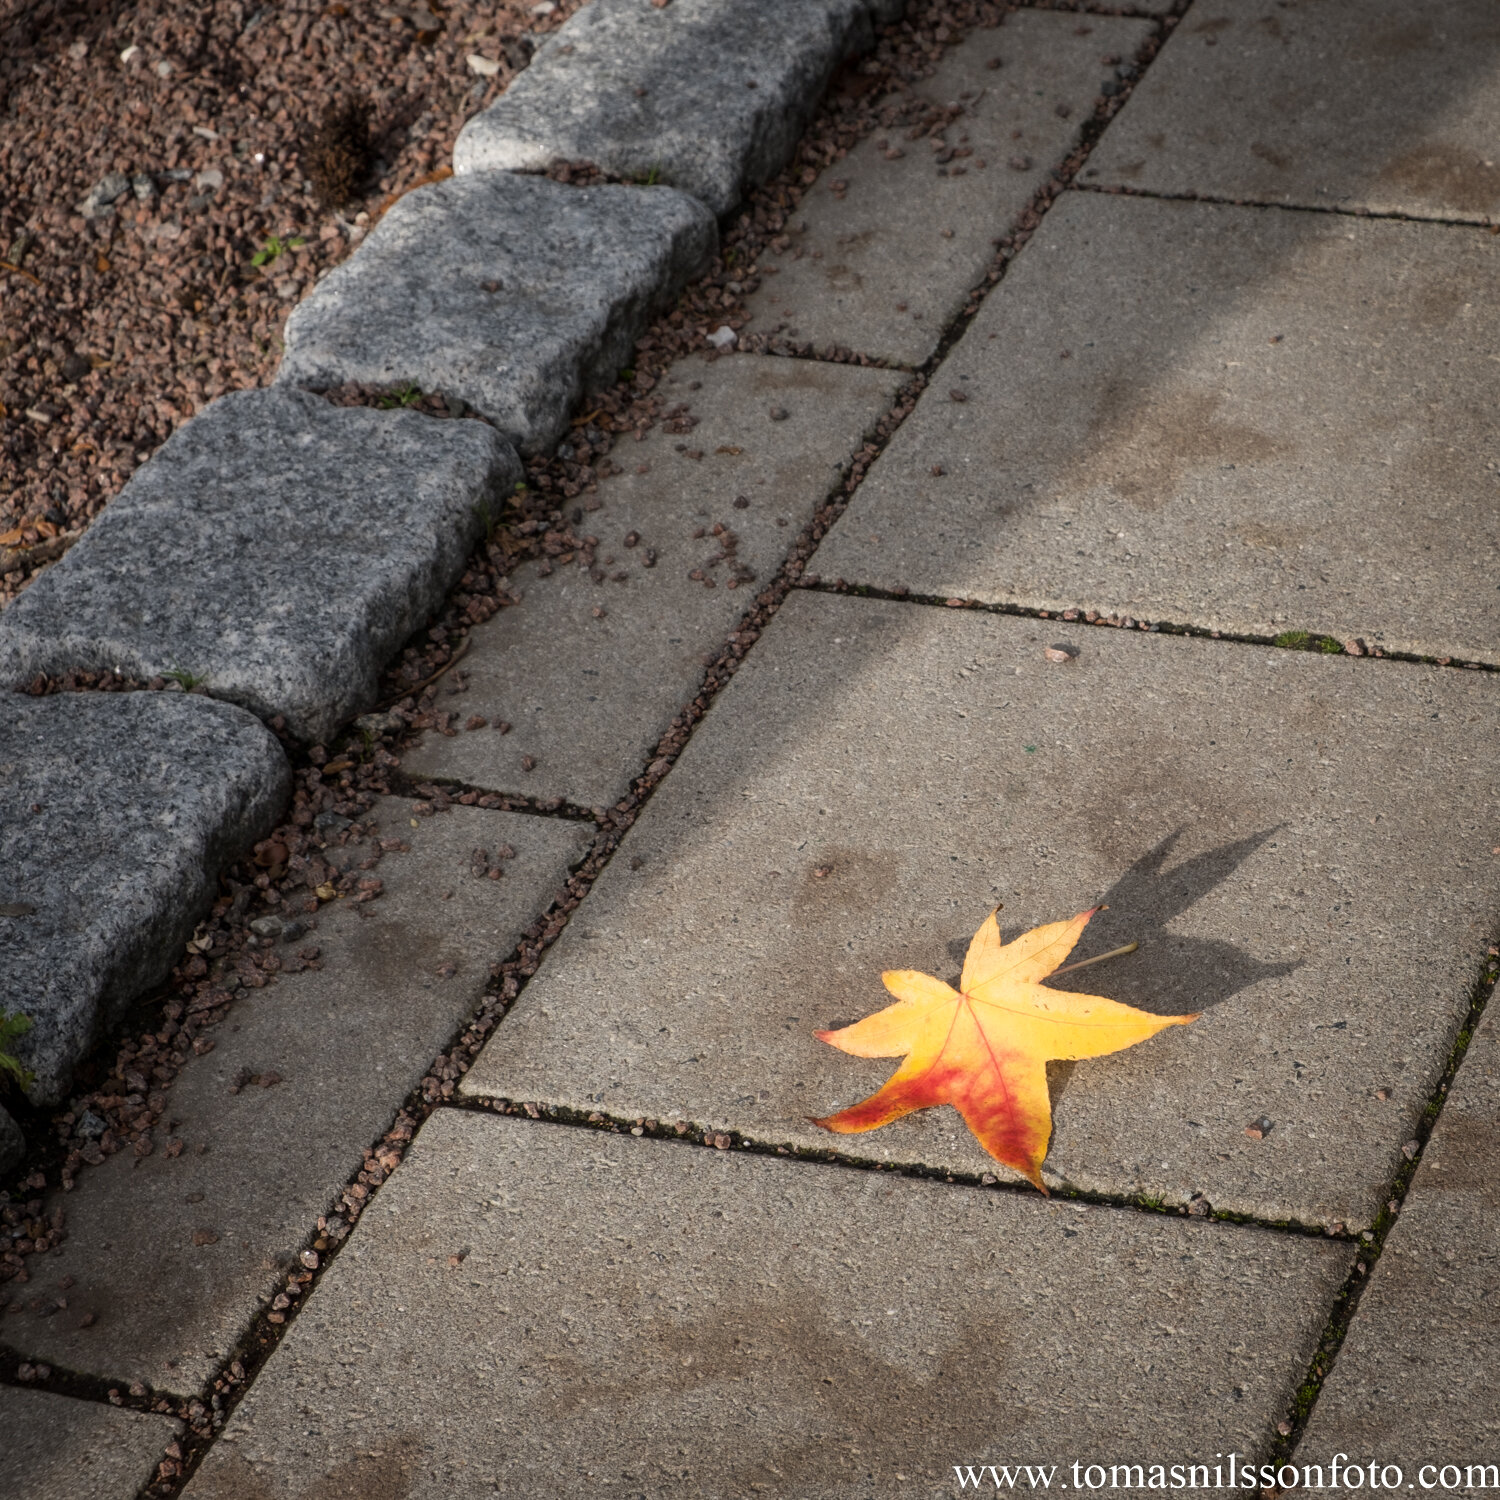 Day 308 - November 4: Maple Leaf